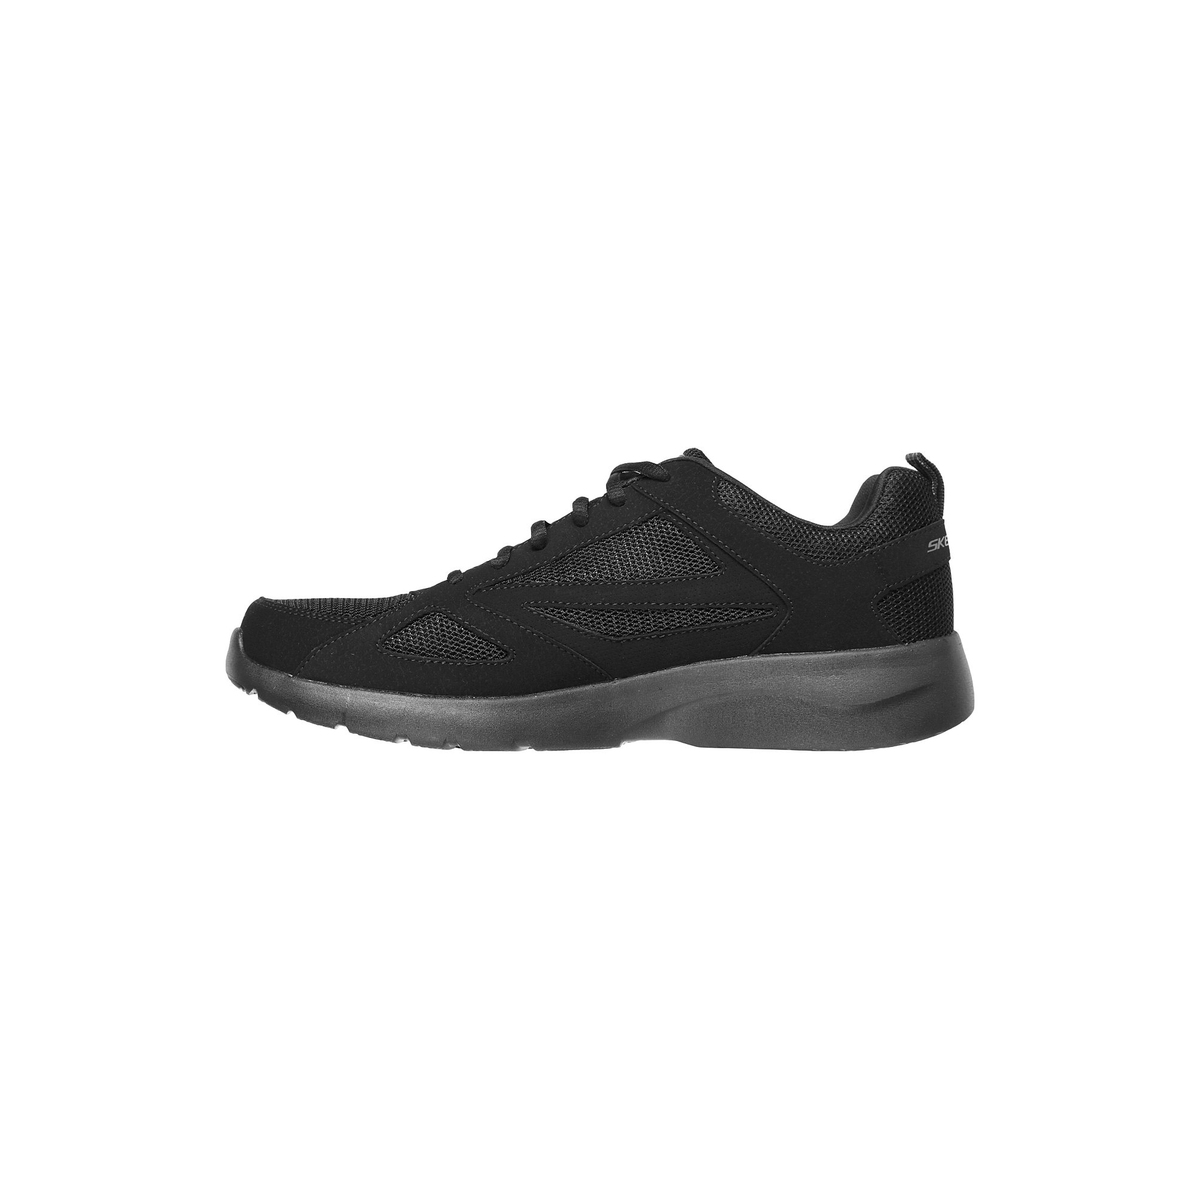 Skechers Men's Shoes Extra Wide 58363 BBK 42.5 Online at Best Price ...